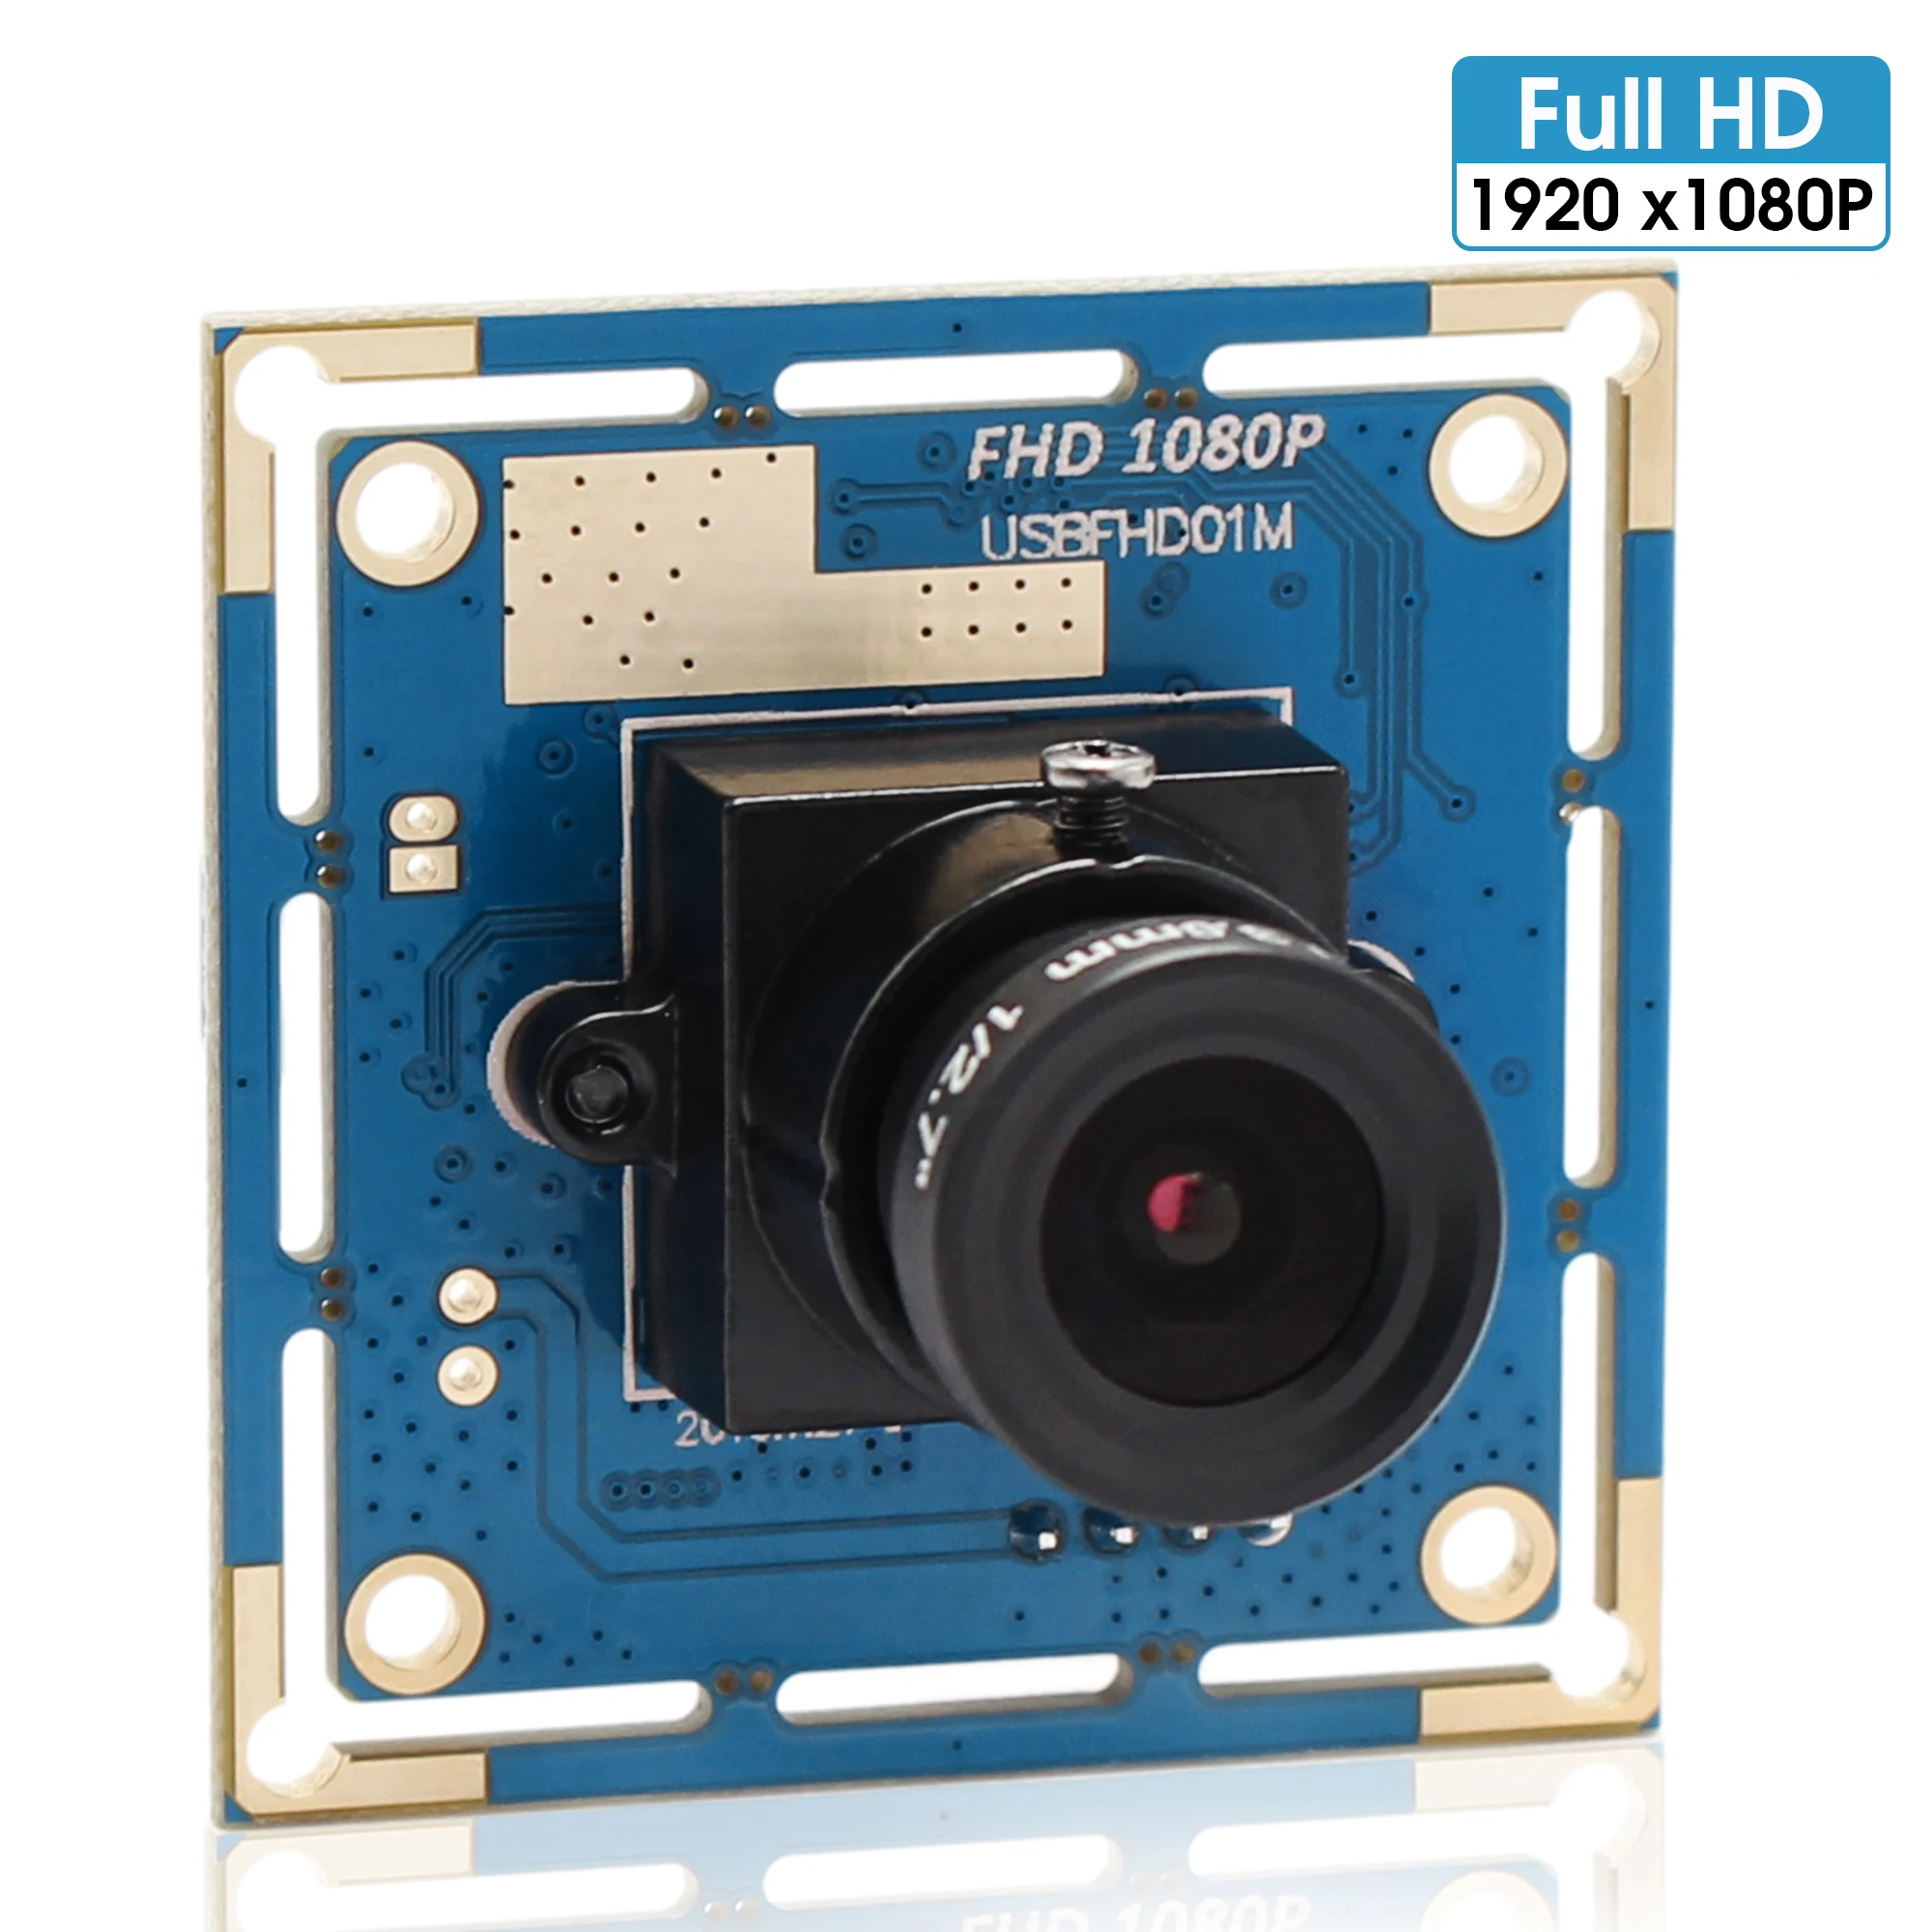 

1080p Full Hd MJPEG 30fps/60fps/100fps High Speed CMOS OV2710 Wide Angle Mini CCTV Security UVC OTG OEM Webcam Usb Camera Module